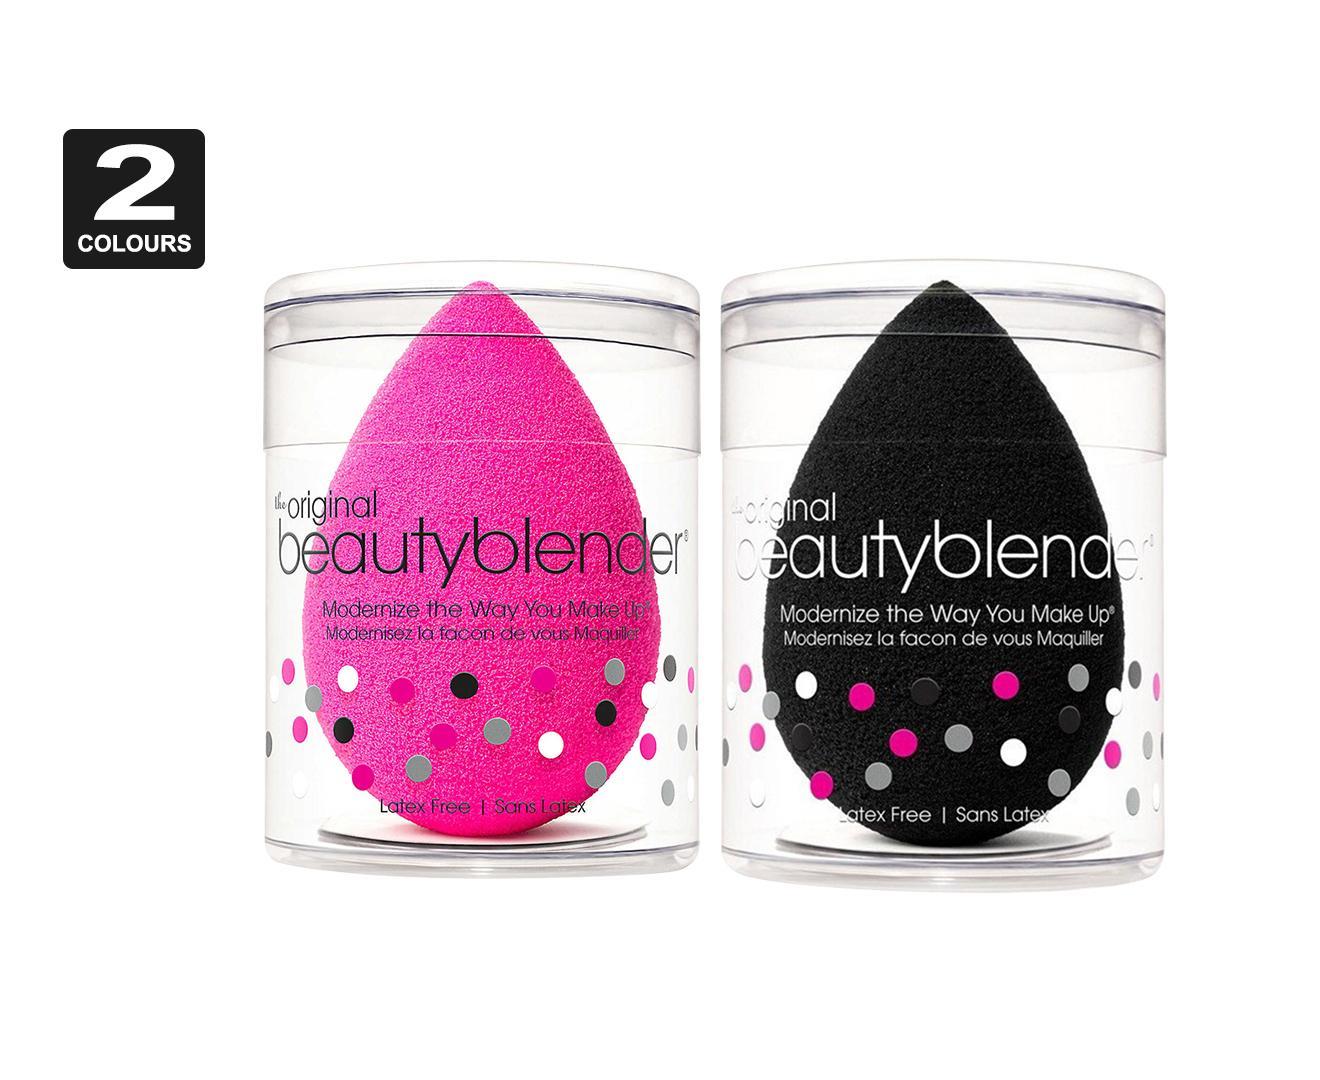 The Original BeautyBlender Makeup Applicator Beauty Blender Sponge - Pink